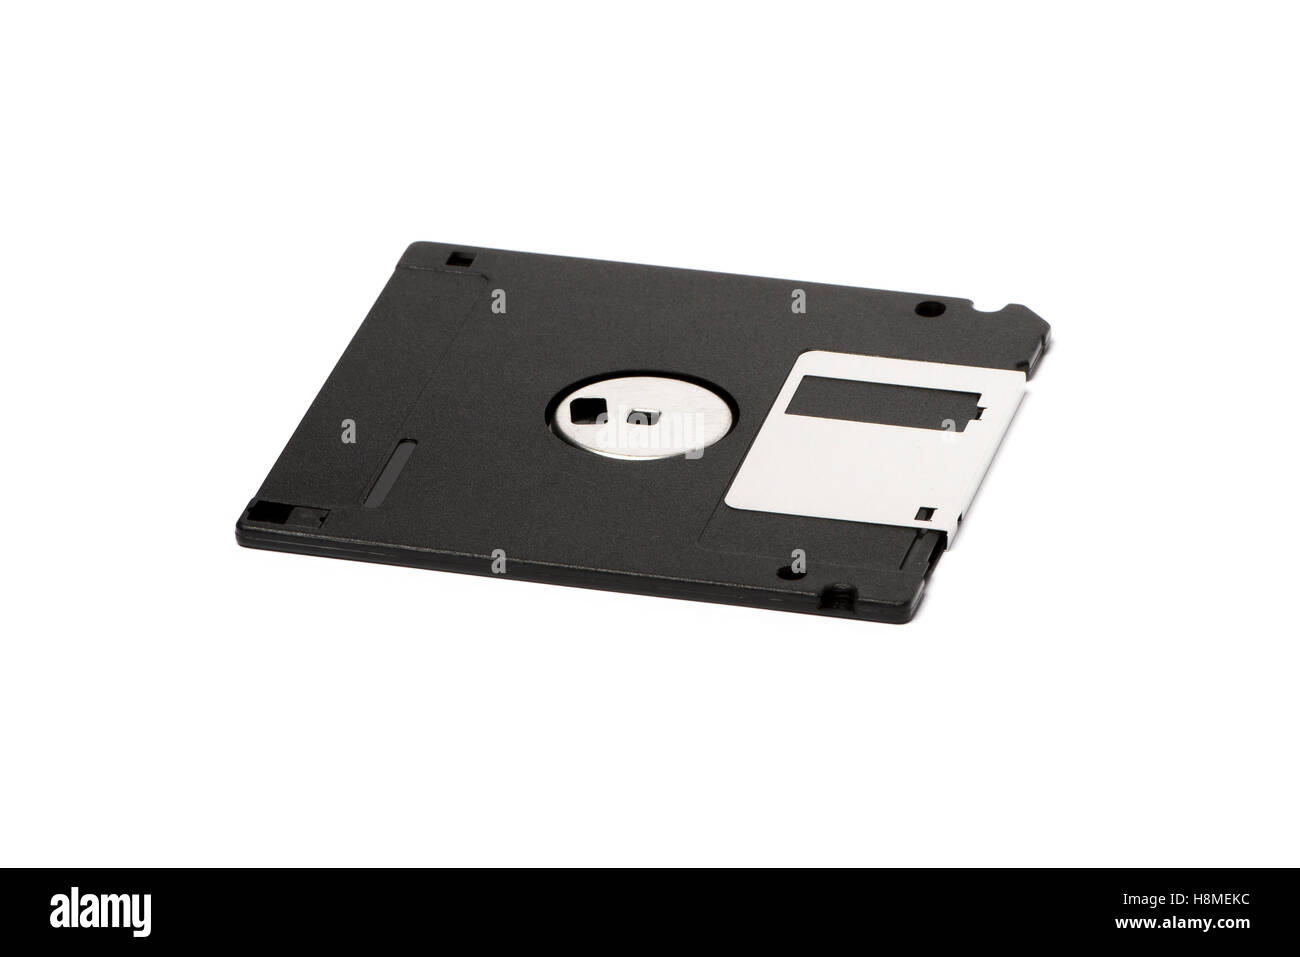 Single floppy disk isolated Stock Photo